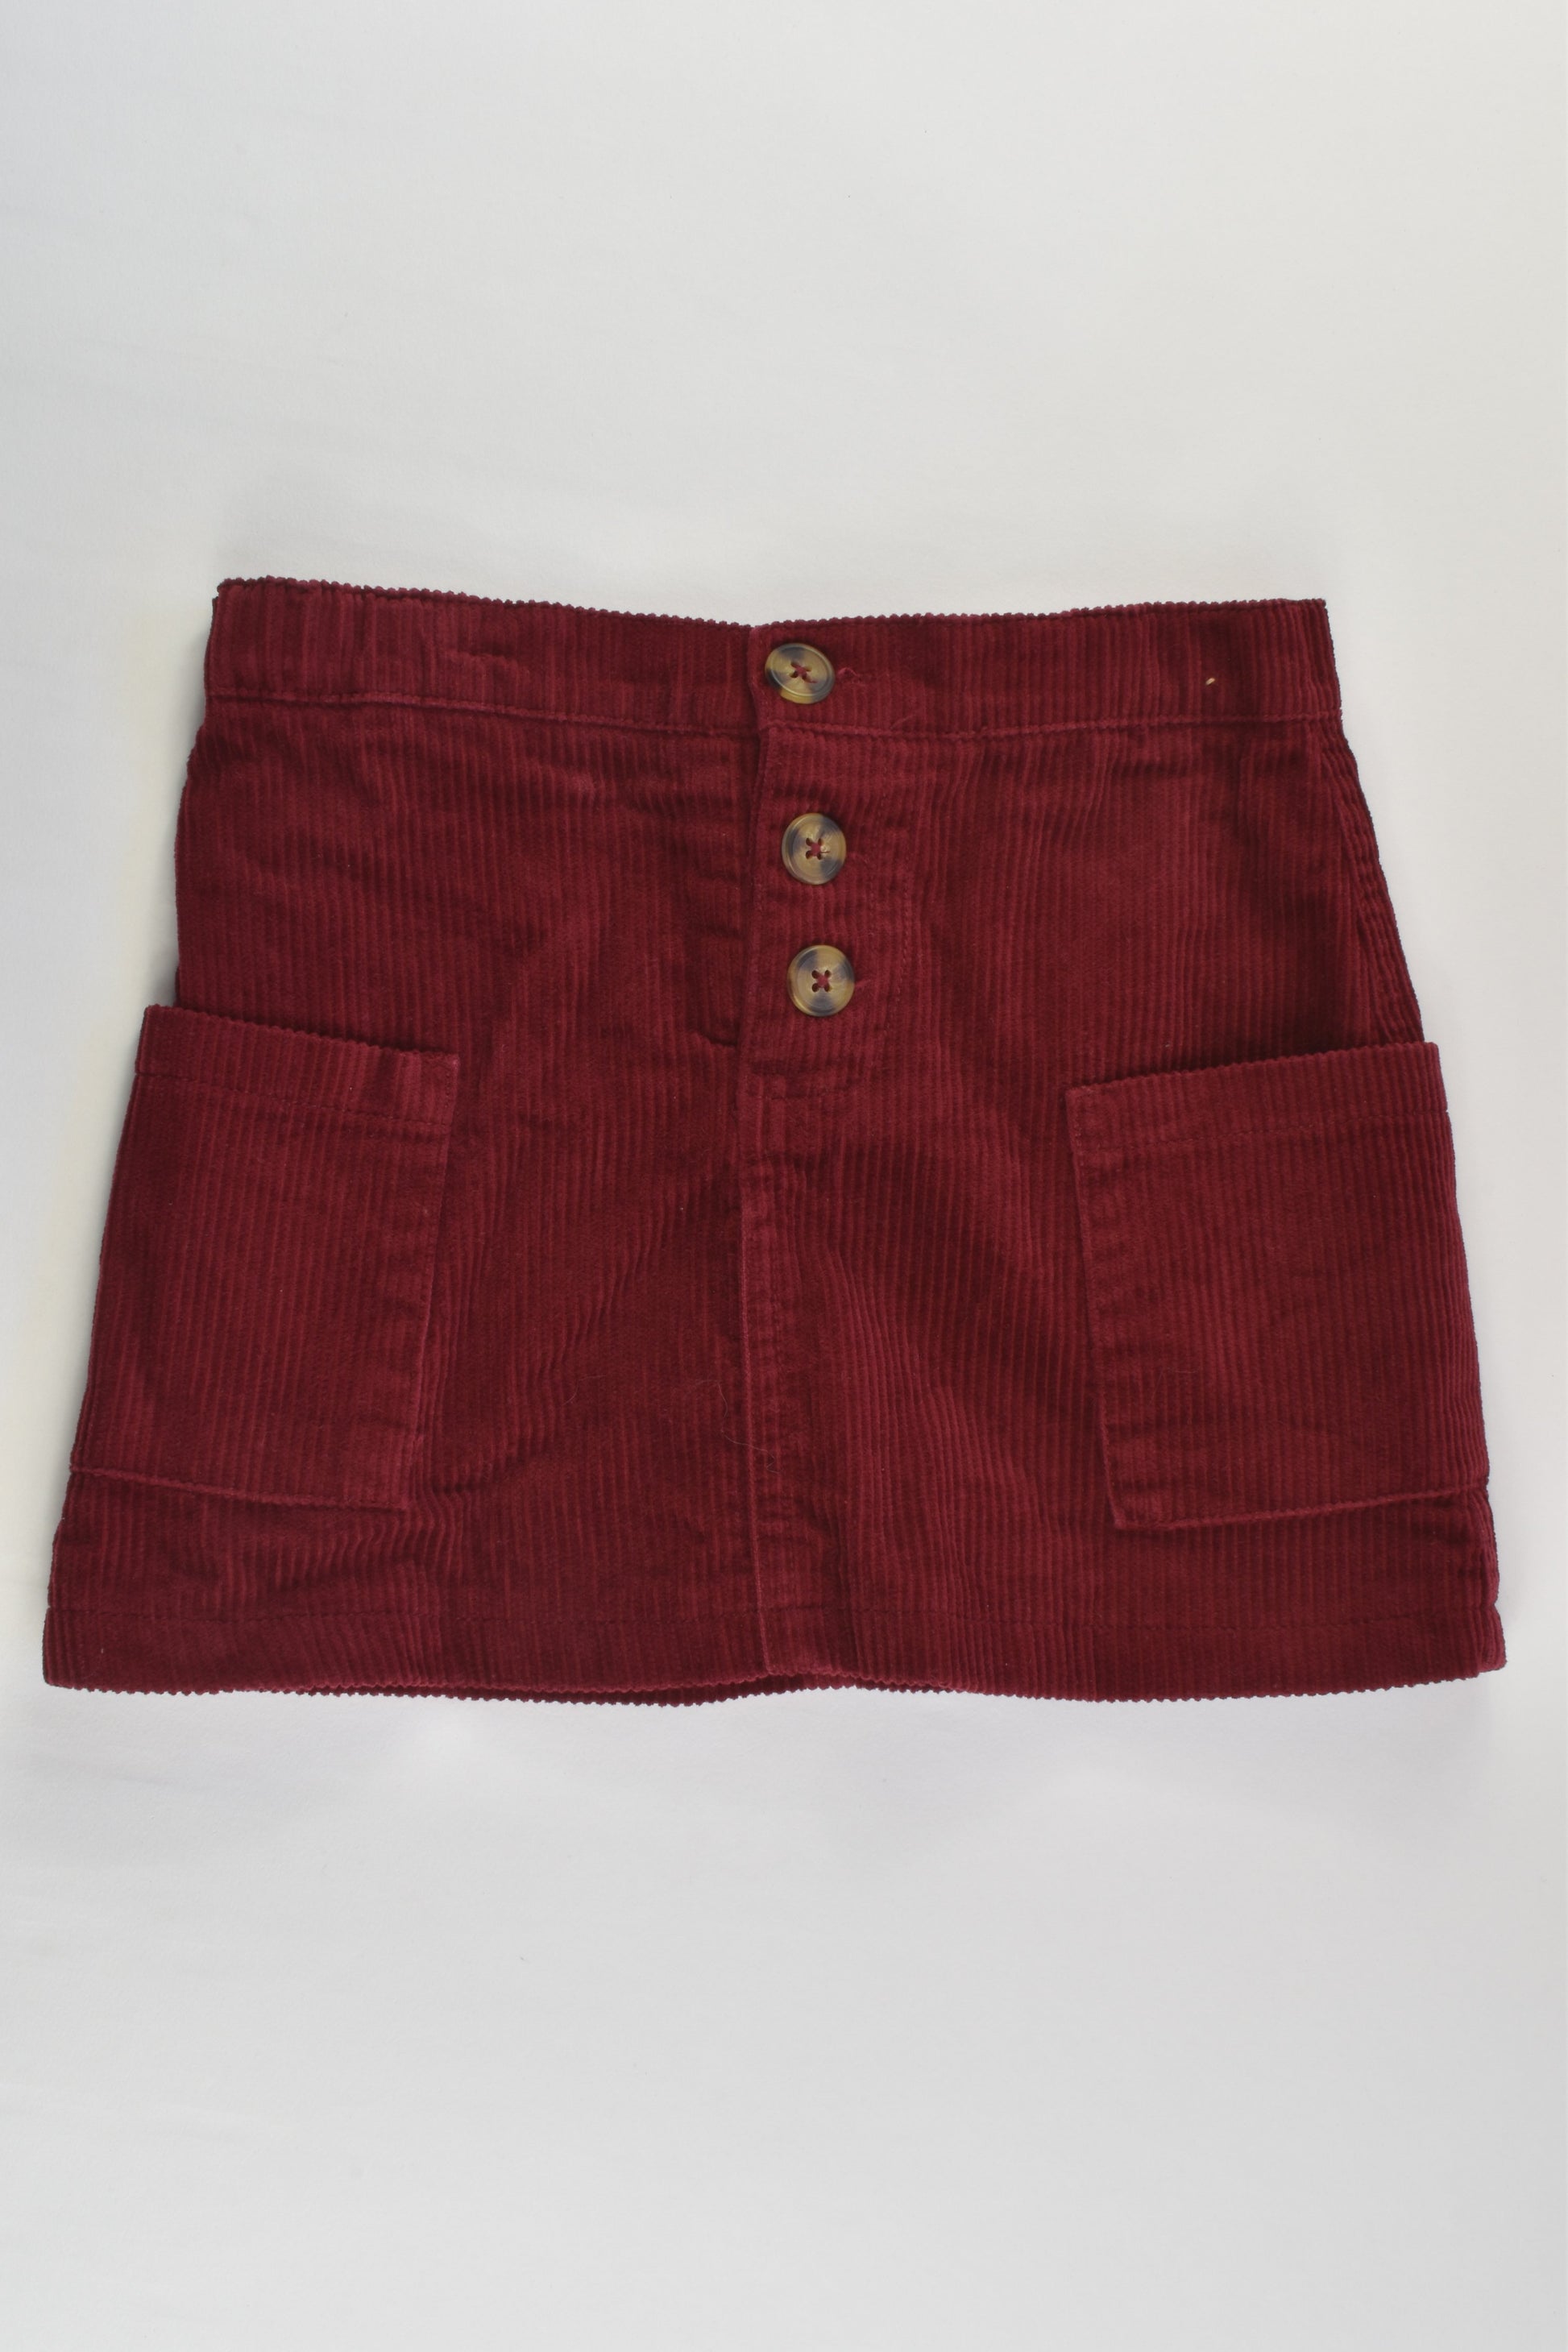 Cotton On Kids Size 5 Cord Skirt